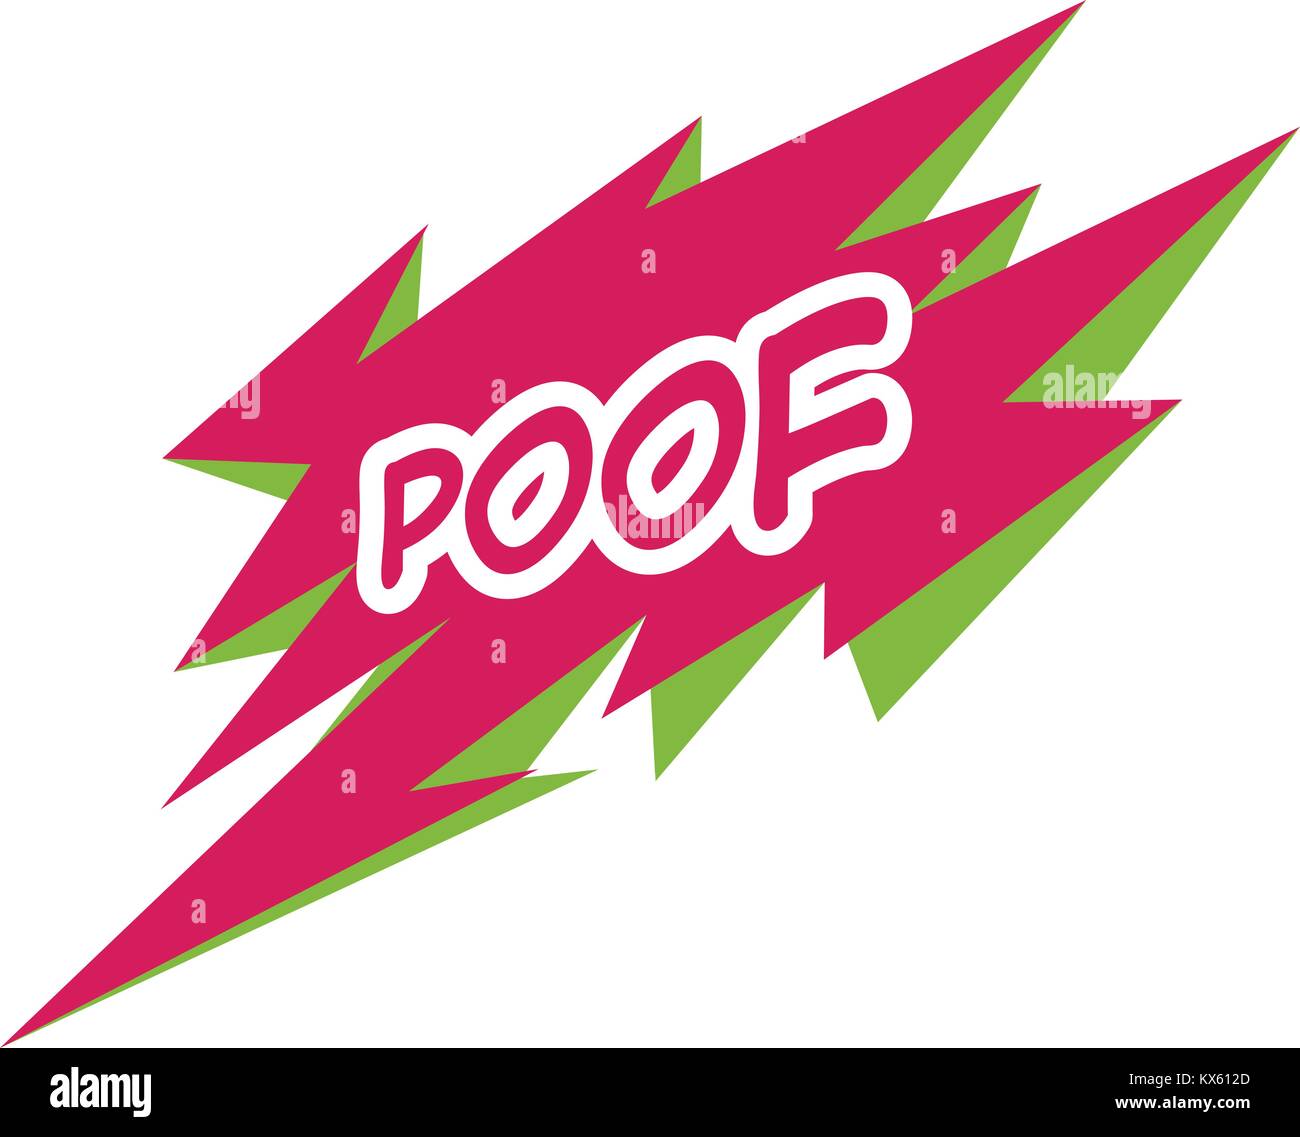 Poof symbol -Fotos und -Bildmaterial in hoher Auflösung – Alamy